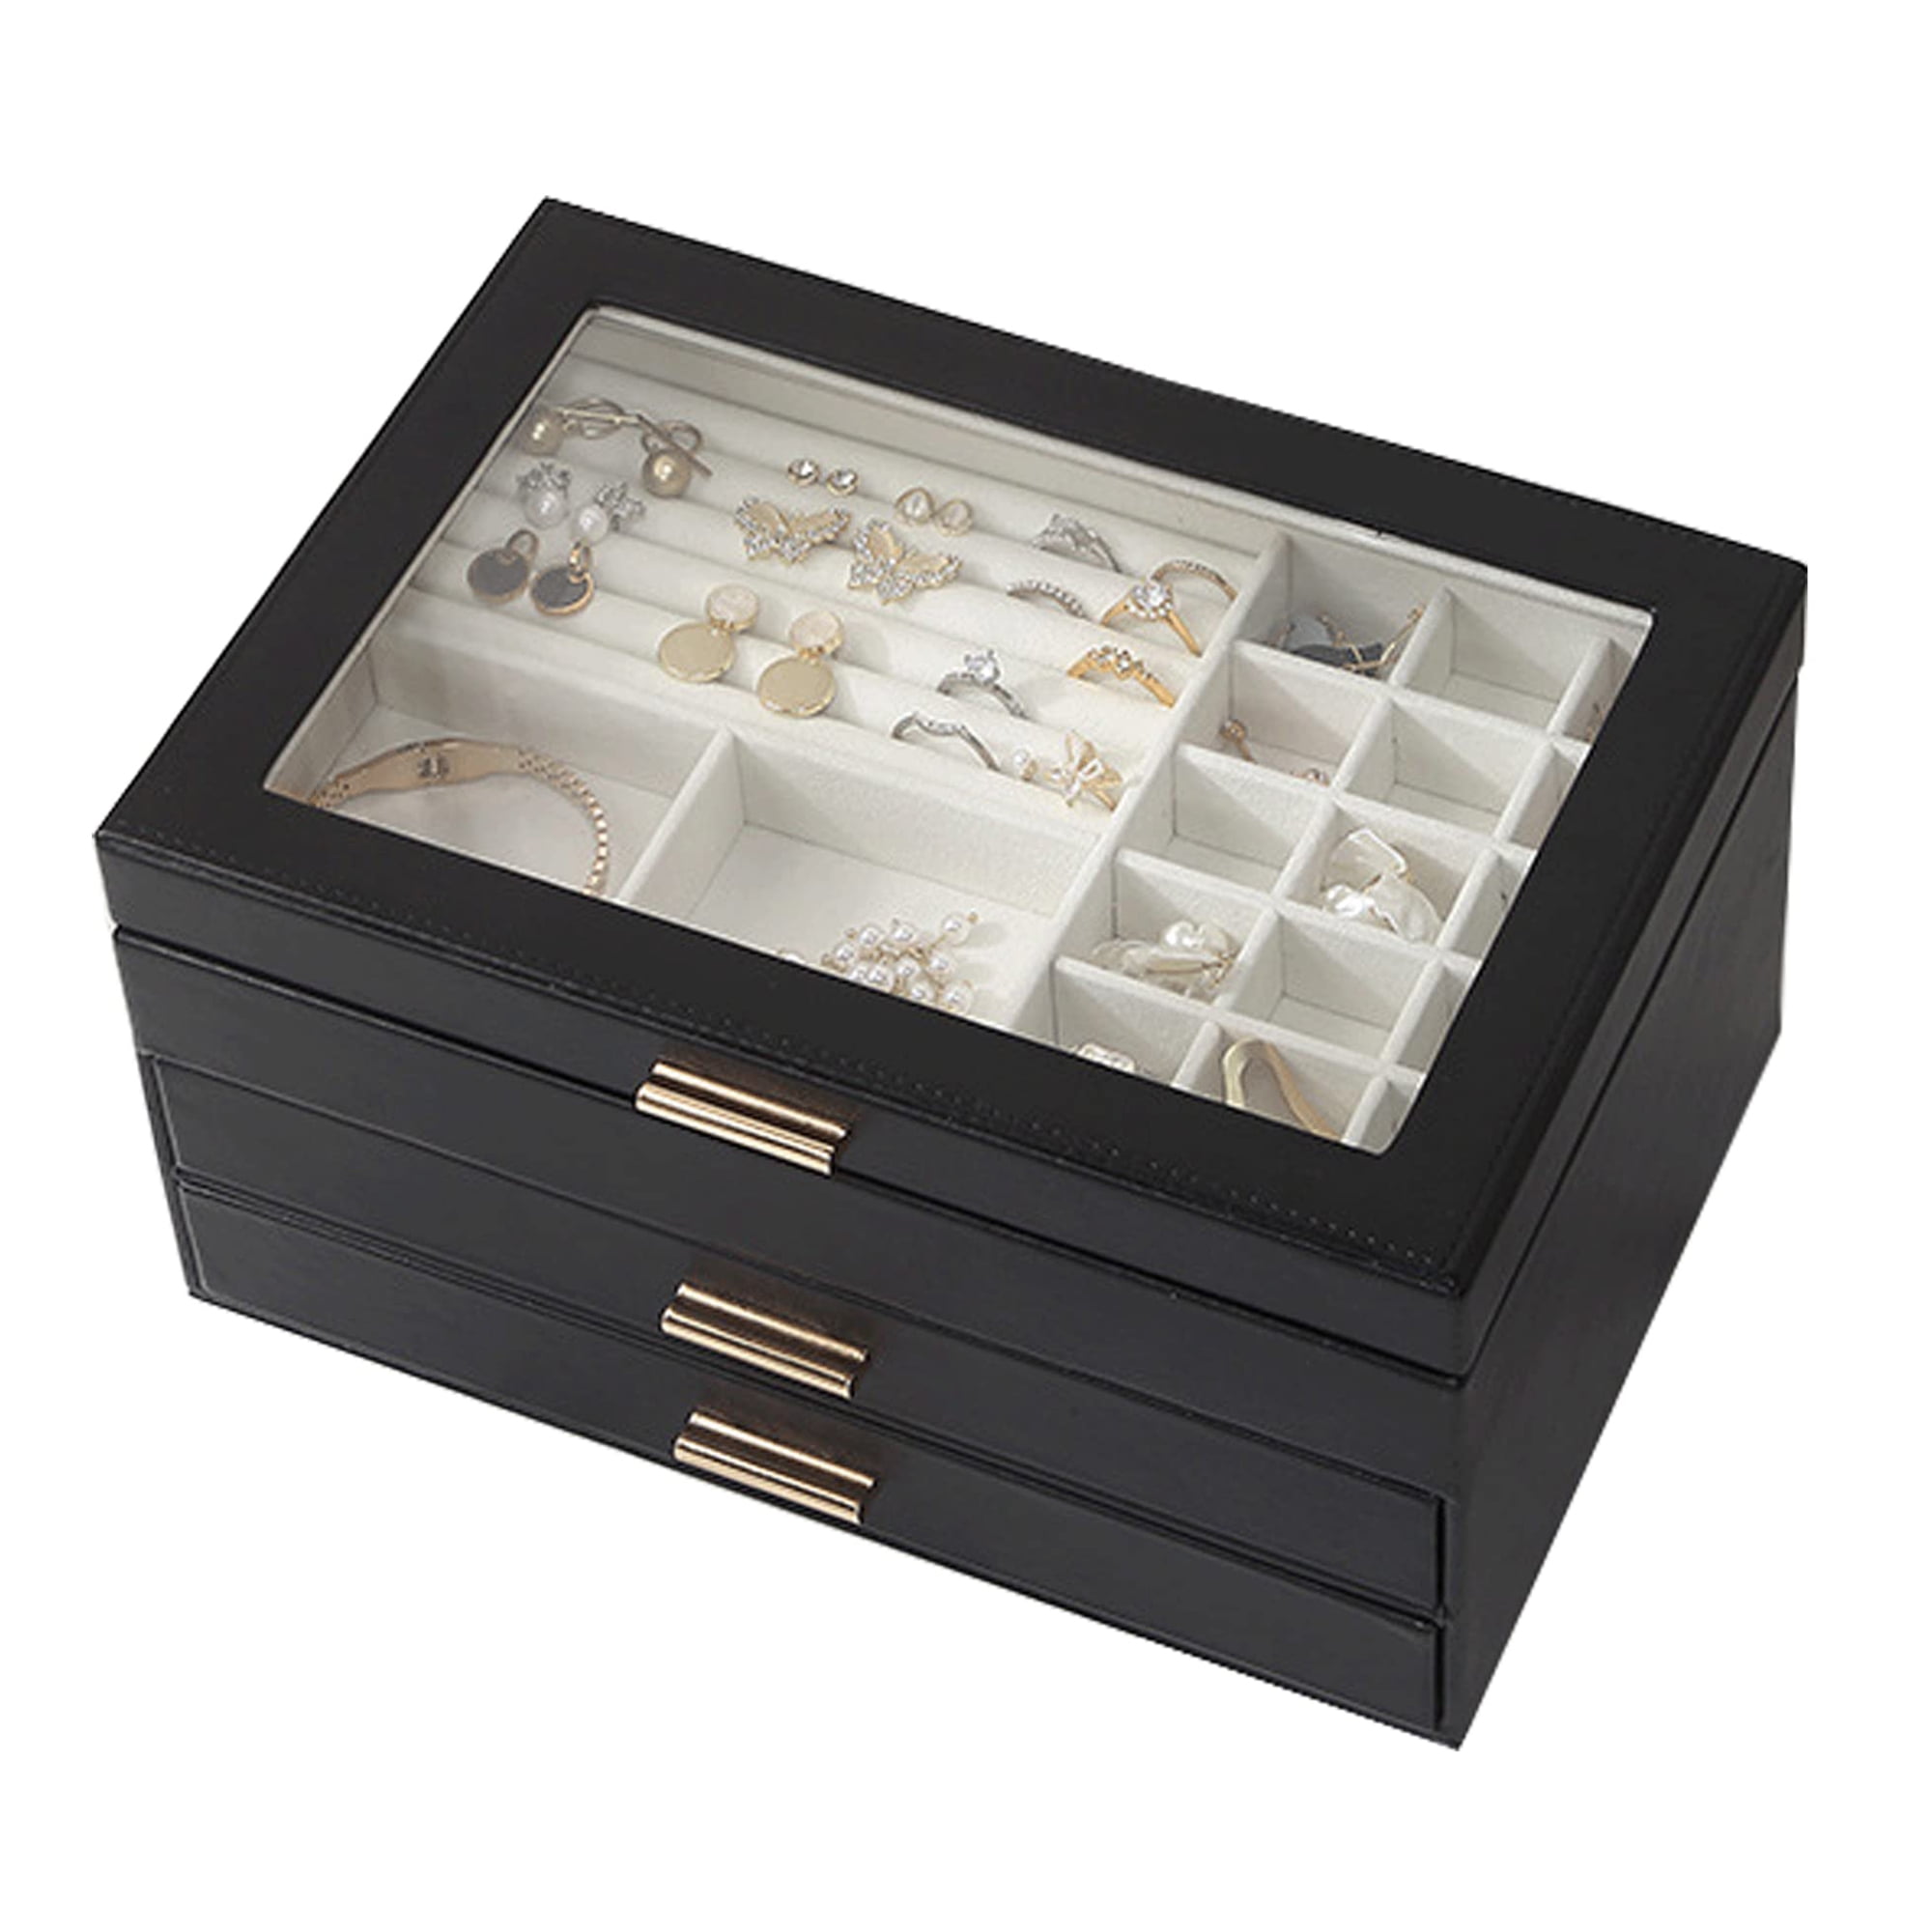 Fengwu 5 Pack Plastic Jewelry Organizer Box 18 Big Girds Clear Storage Organizer Case with Adjustable Dividers Jewelry Storage Containe